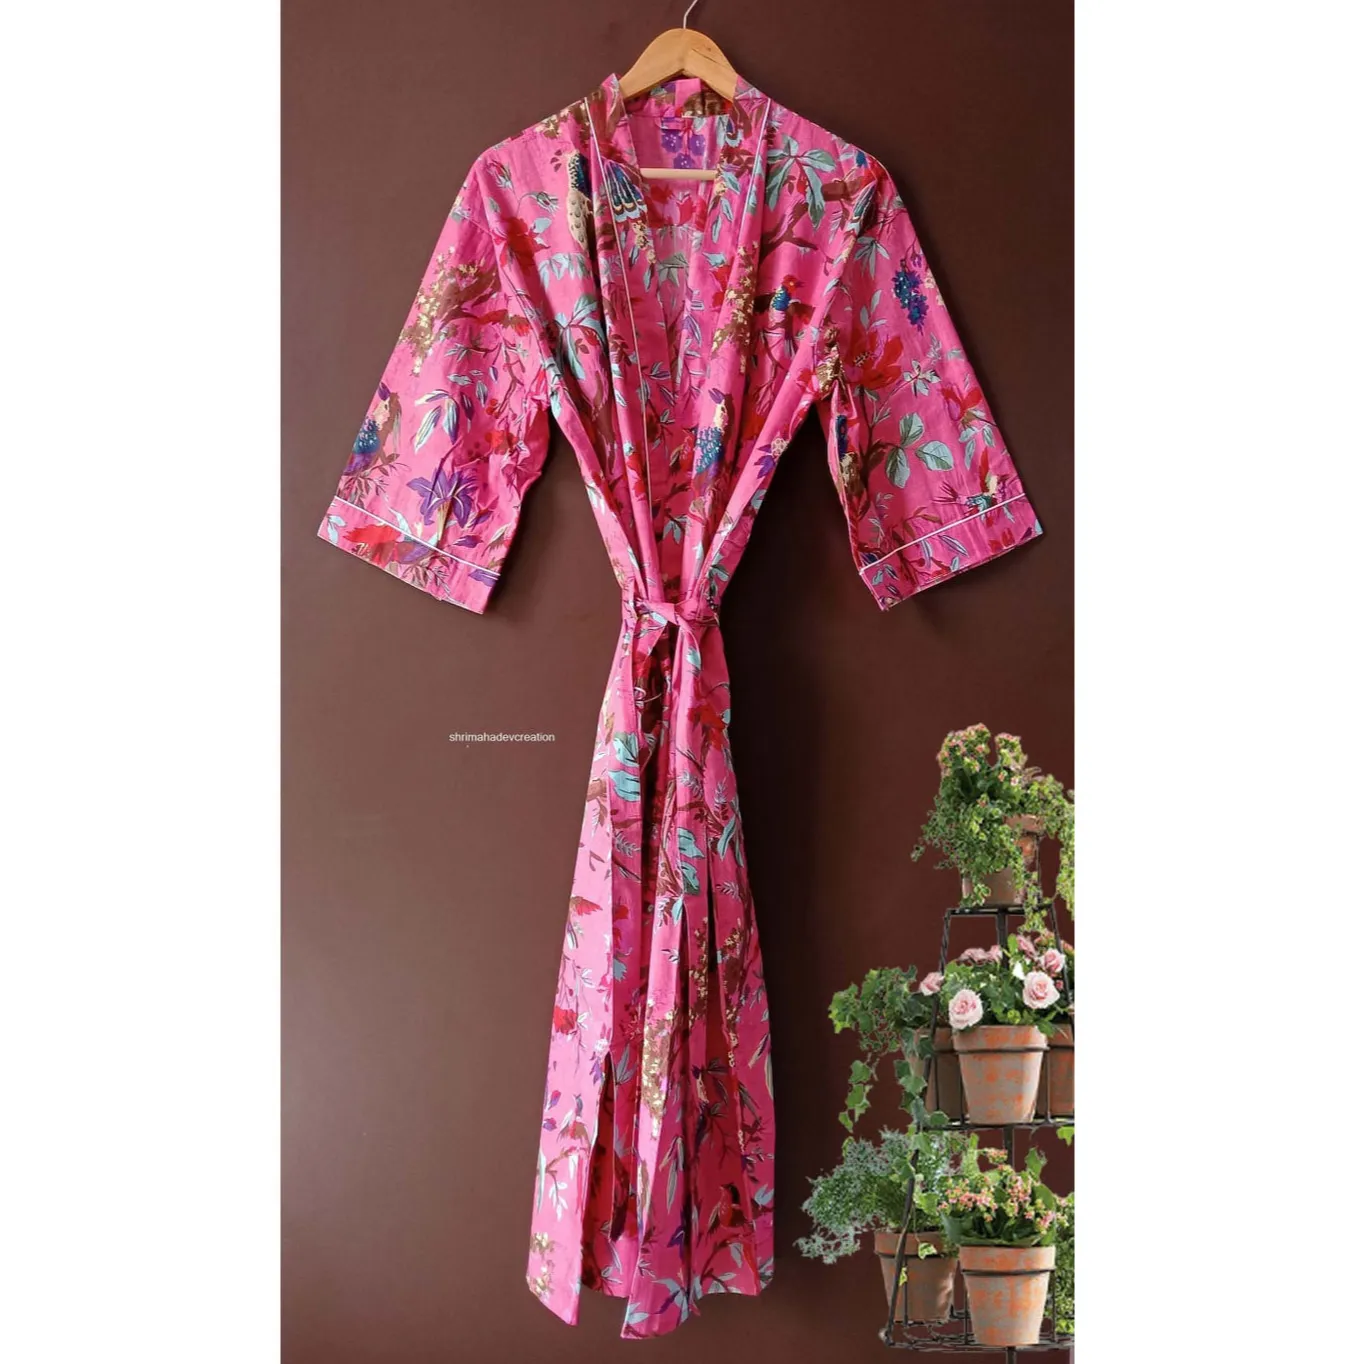 Bird Design Cotton Robe Cotton Kimono, Bath Robe, Swim Wear, Night Wear Dressing Gown Free Size